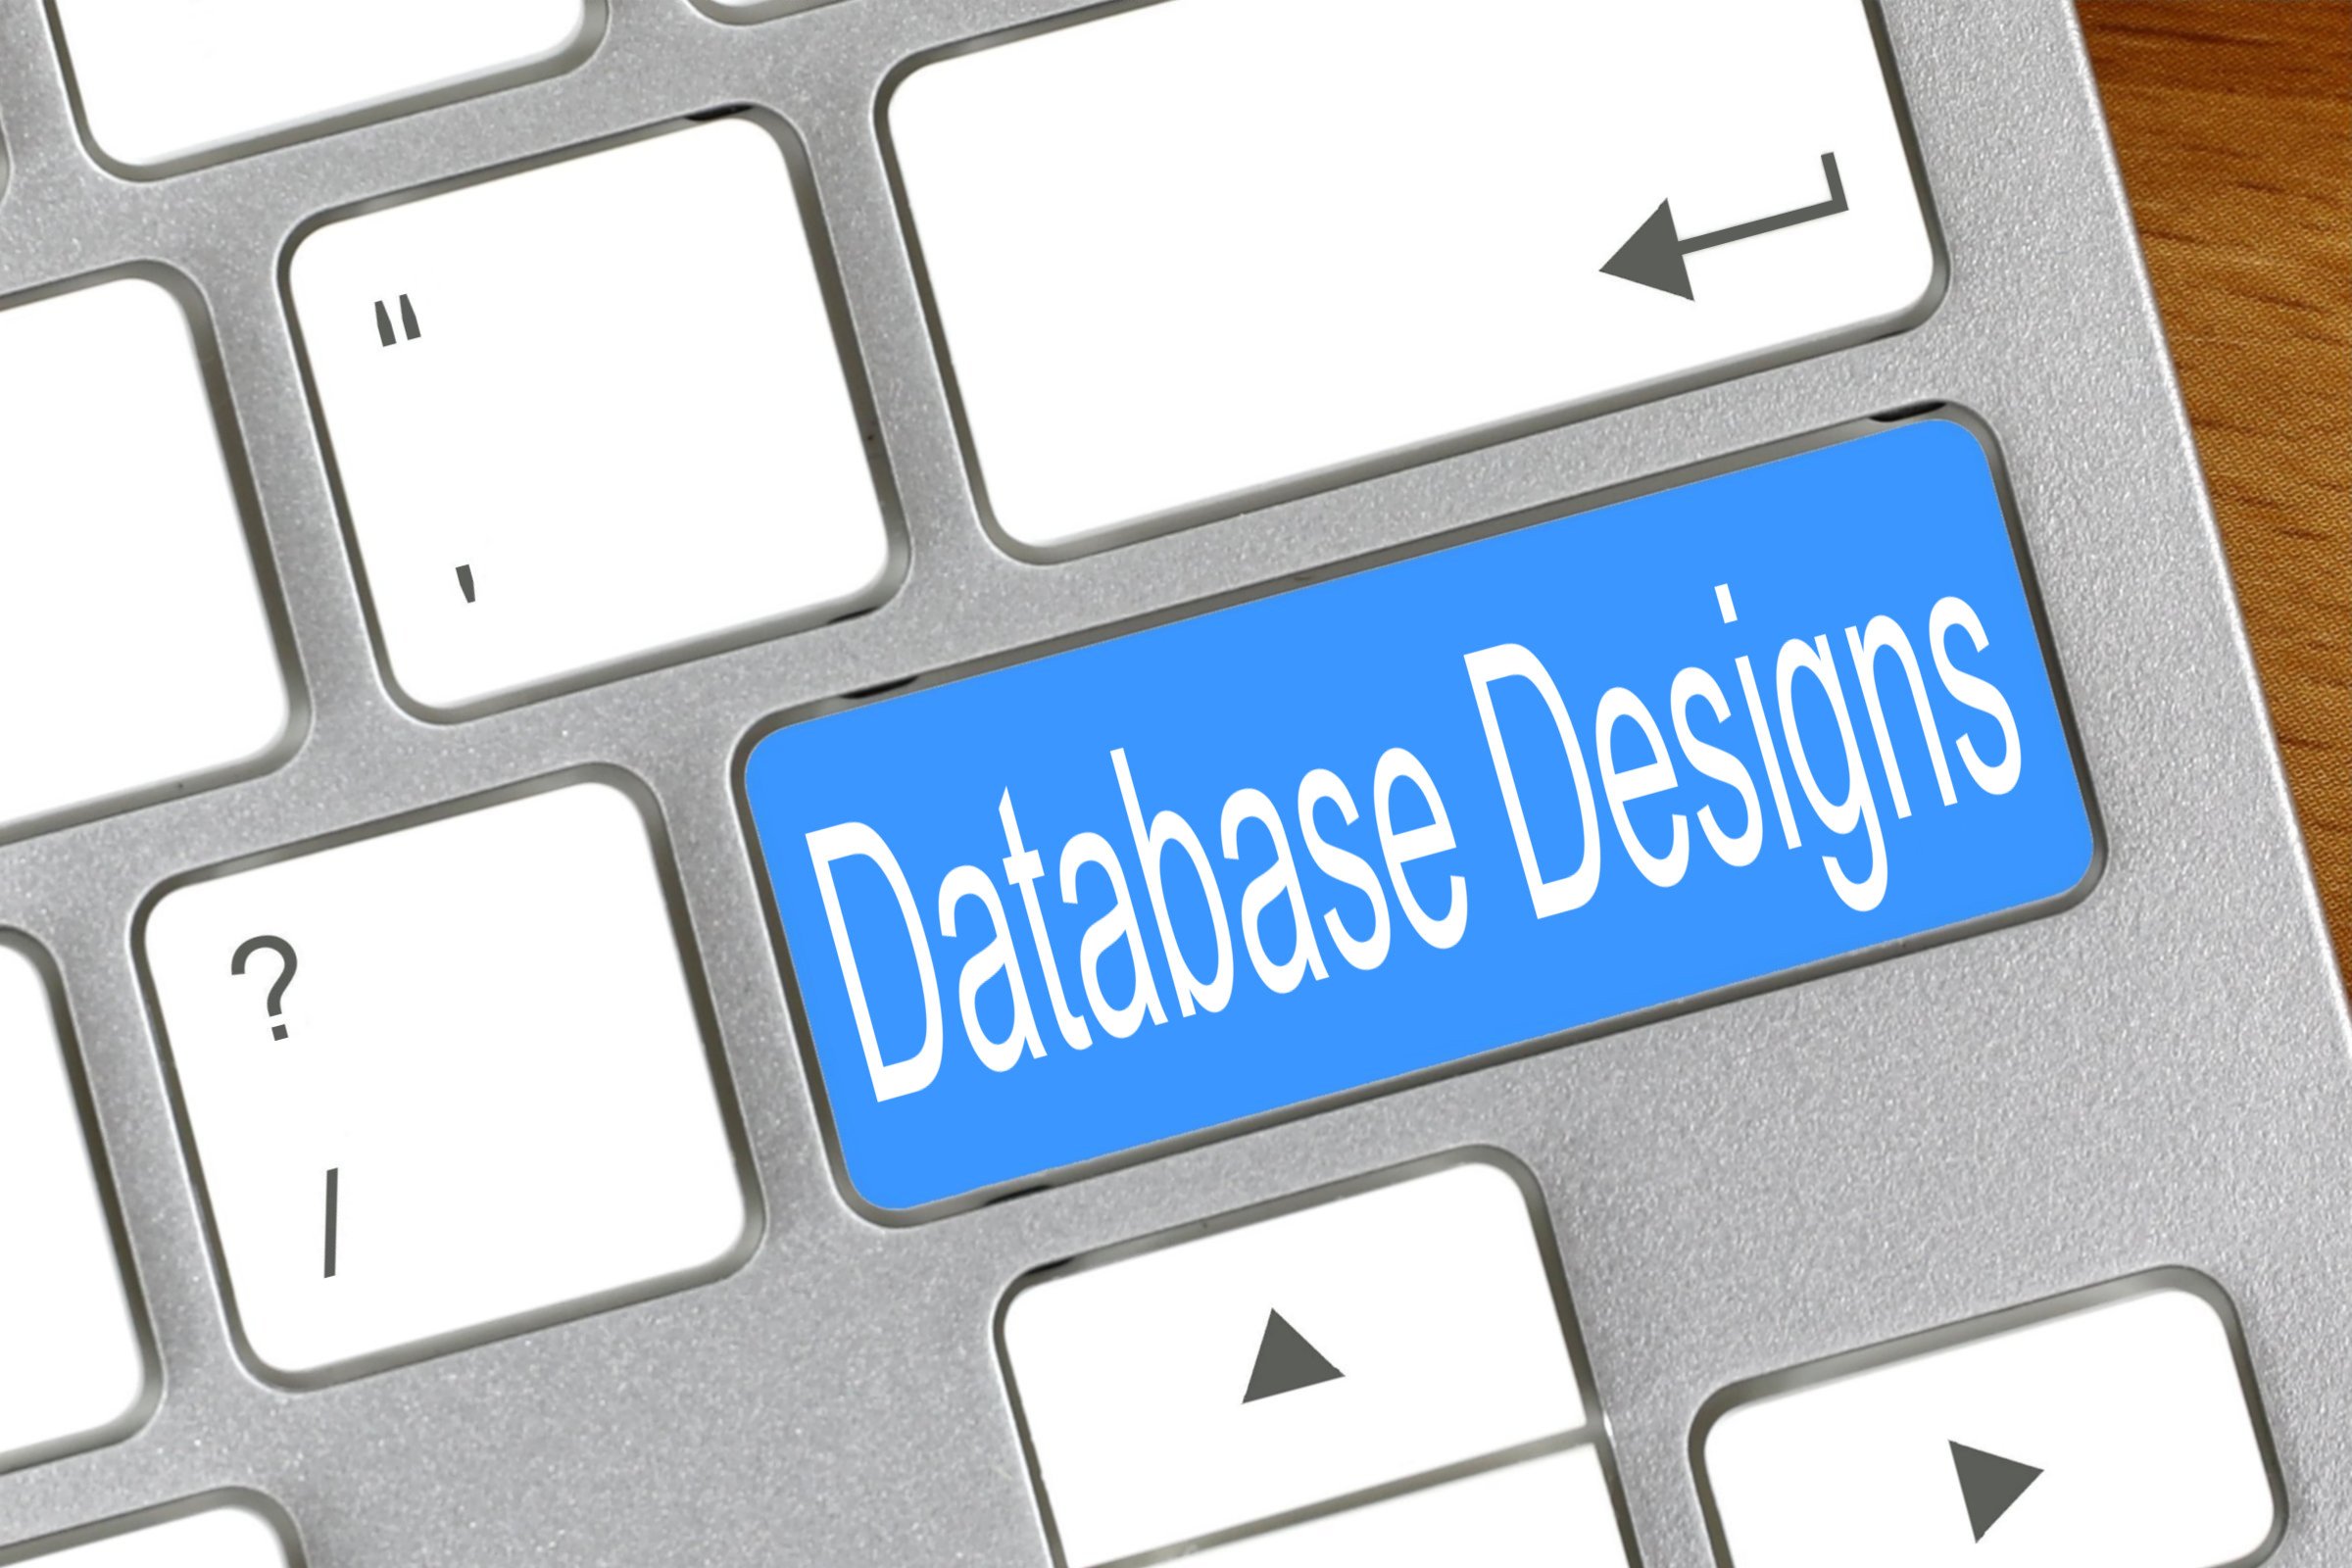 database designs